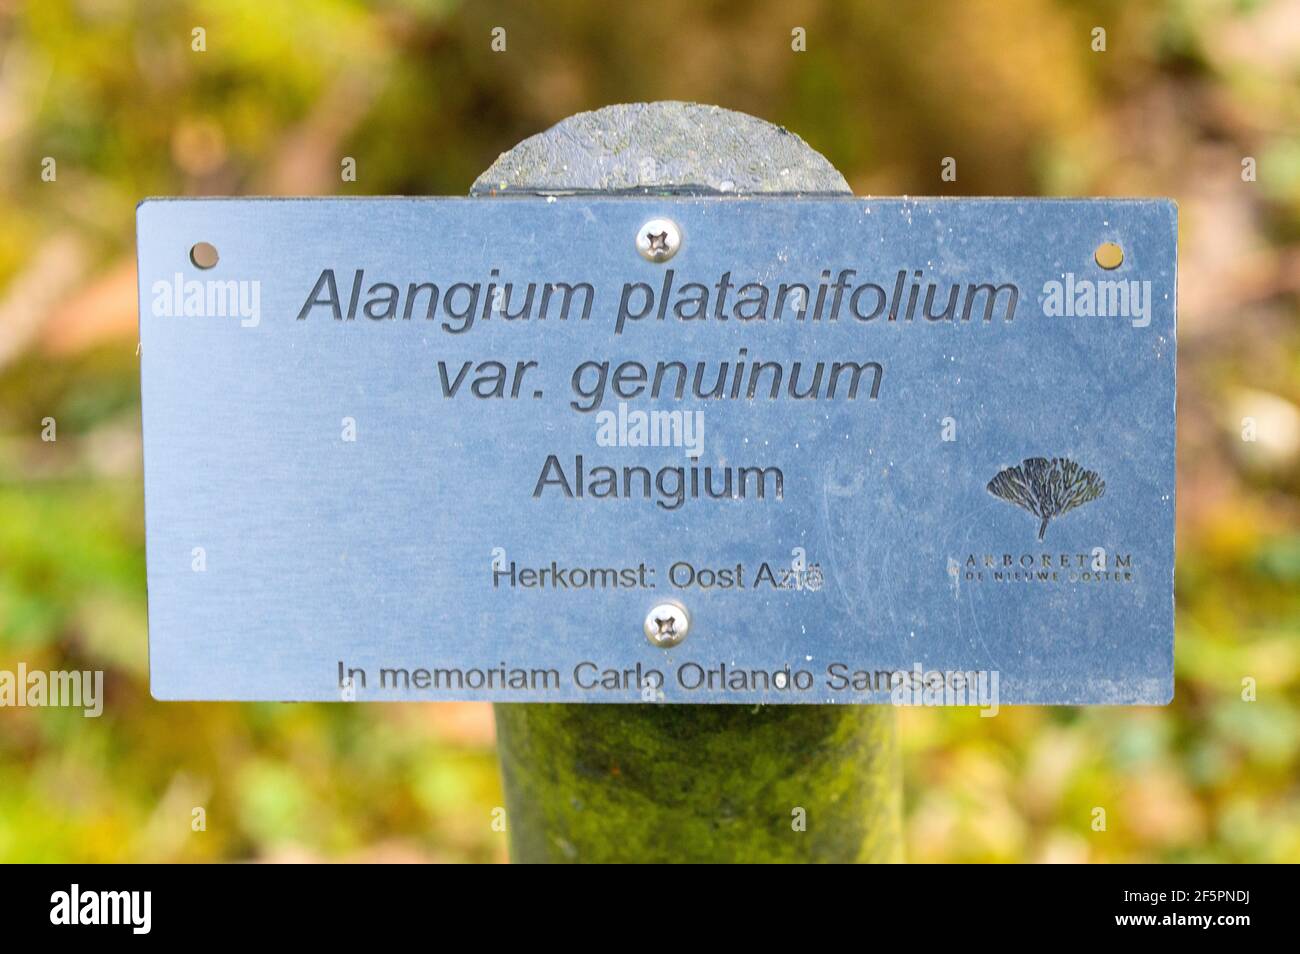 Sign Alangium Platanifolium Var. Genuinum At De Nieuwe Ooster At Amsterdam The Netherlands 26-3-2021 Stock Photo